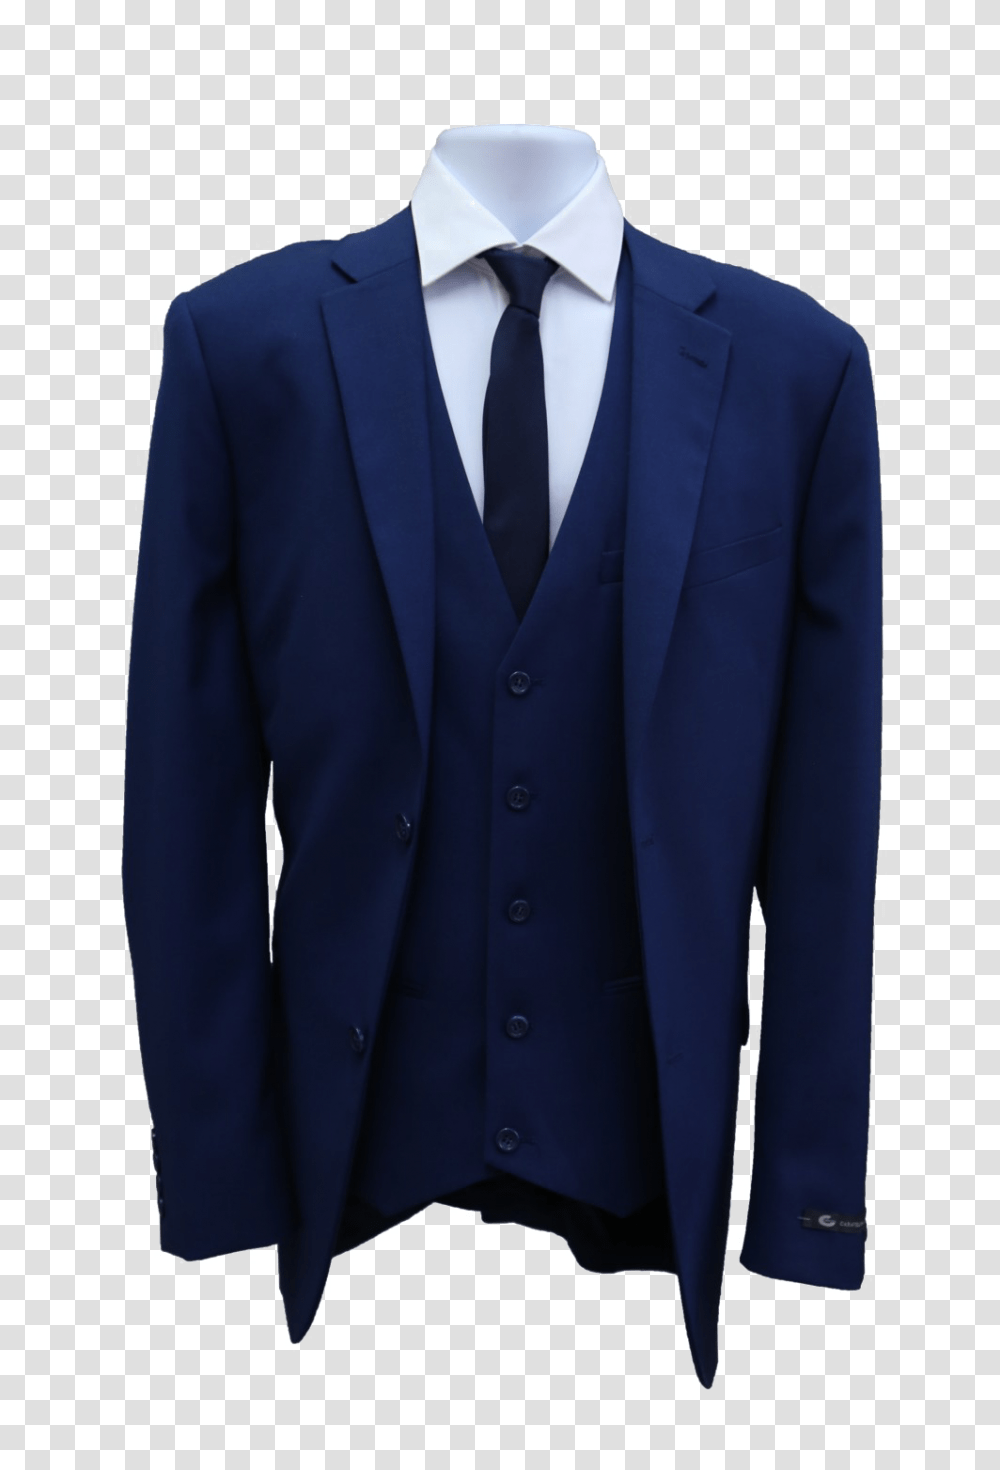 Blue Suit Image Background, Apparel, Overcoat, Tuxedo Transparent Png